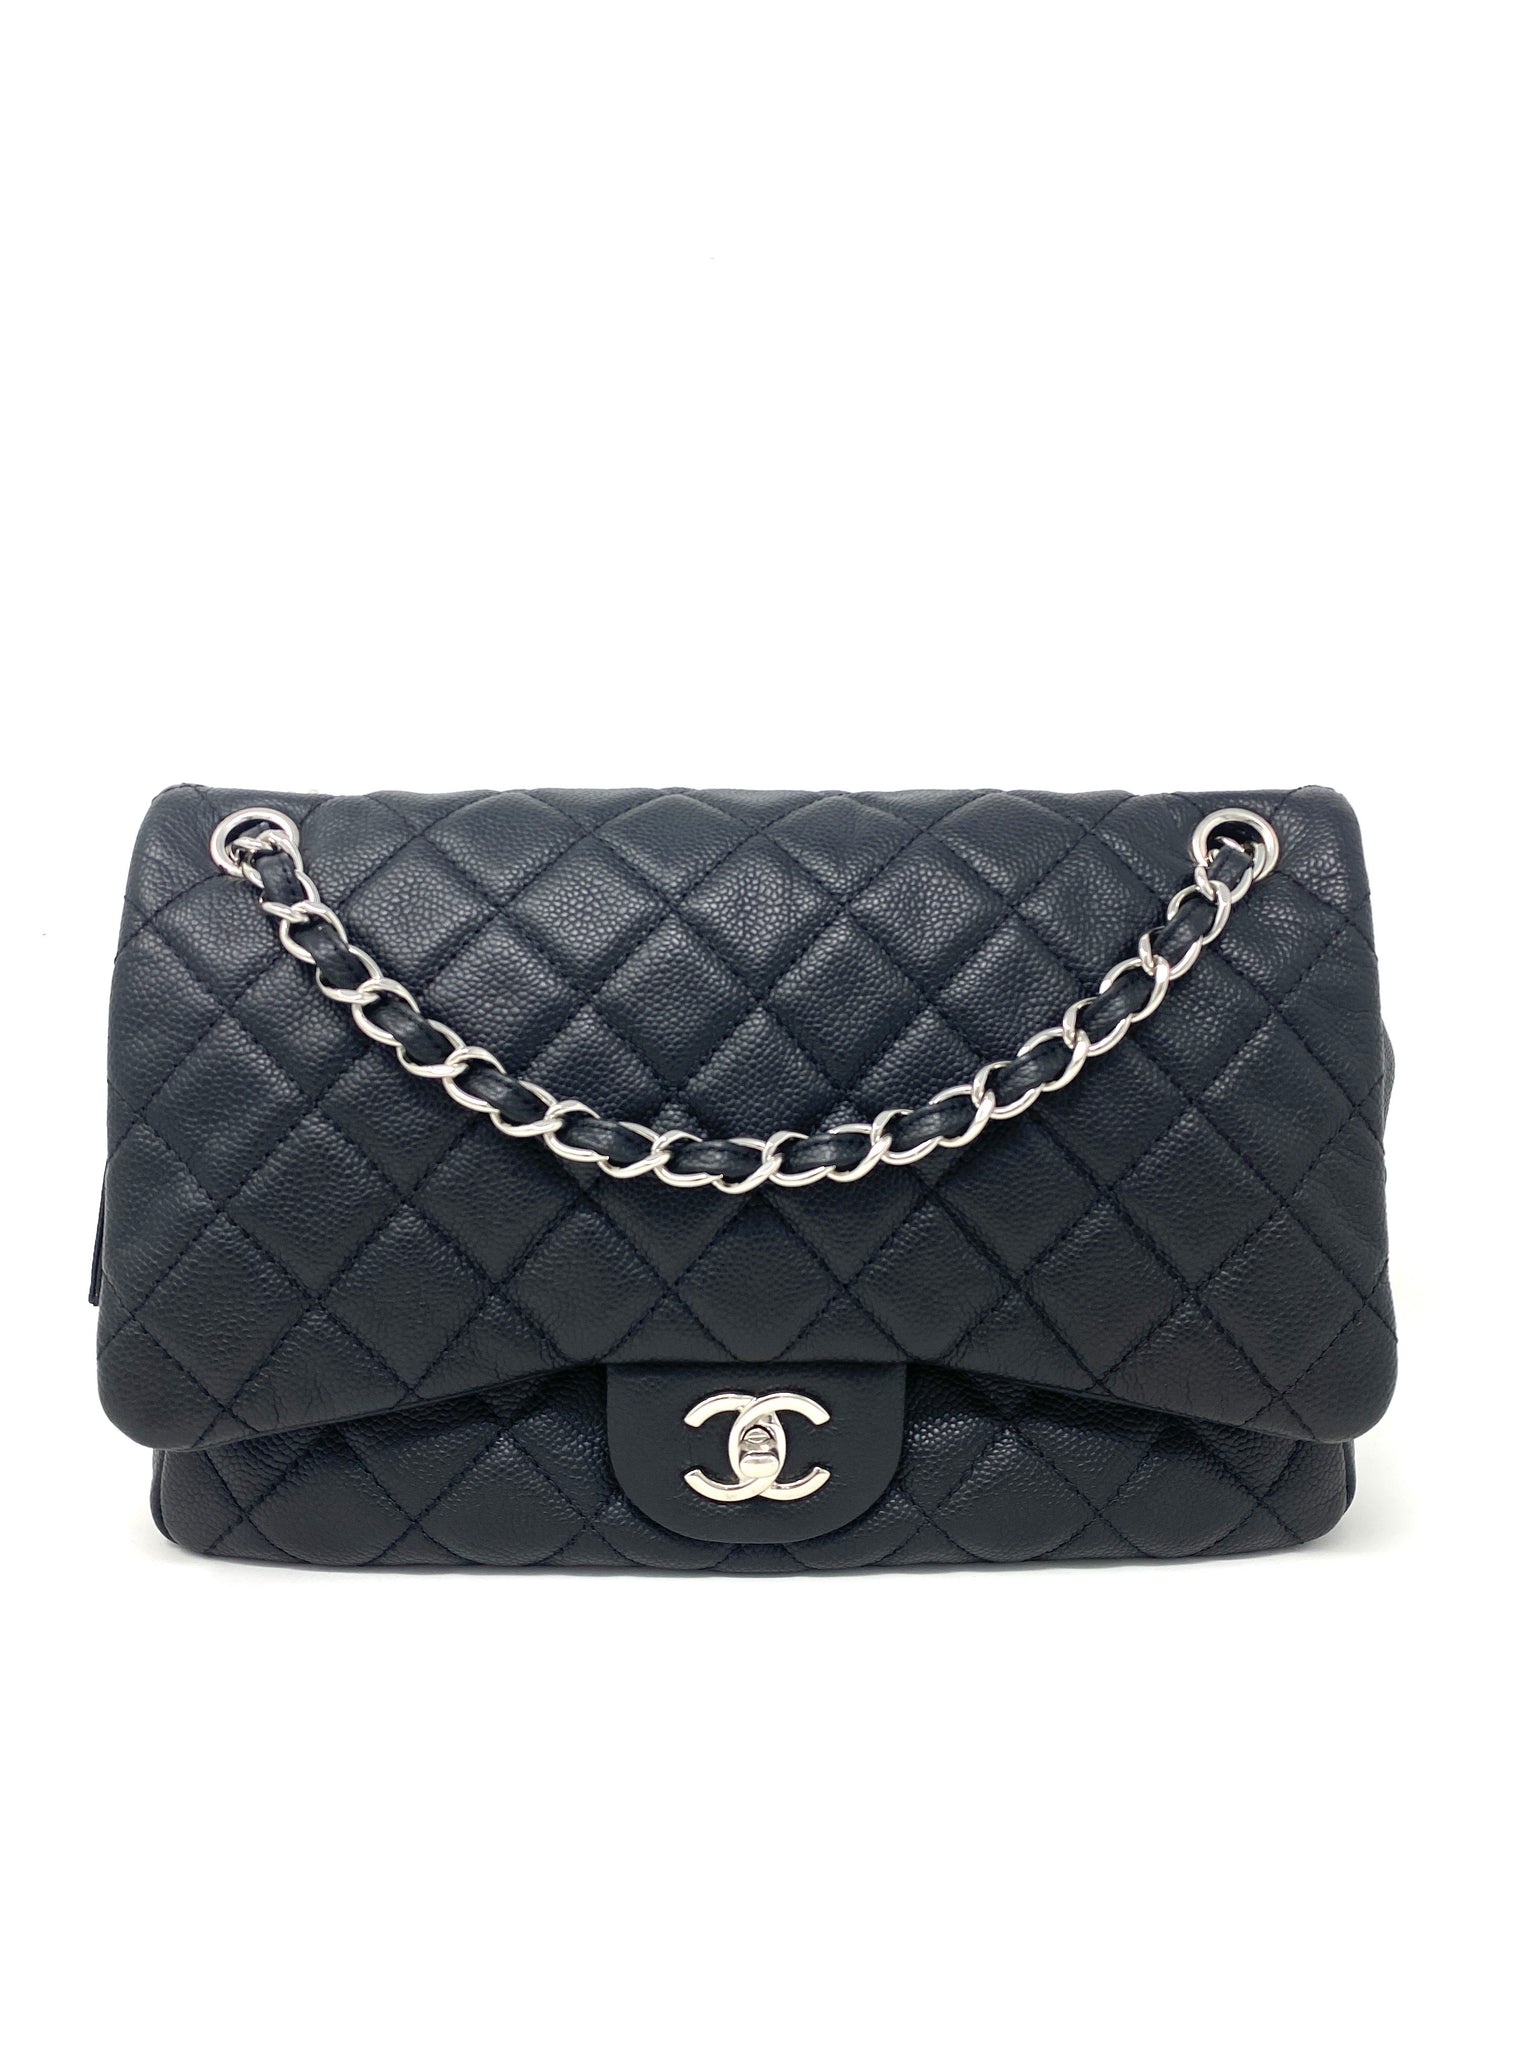 Chanel Pearl Boy Chain Flap Bag Quilted Calfskin Mini